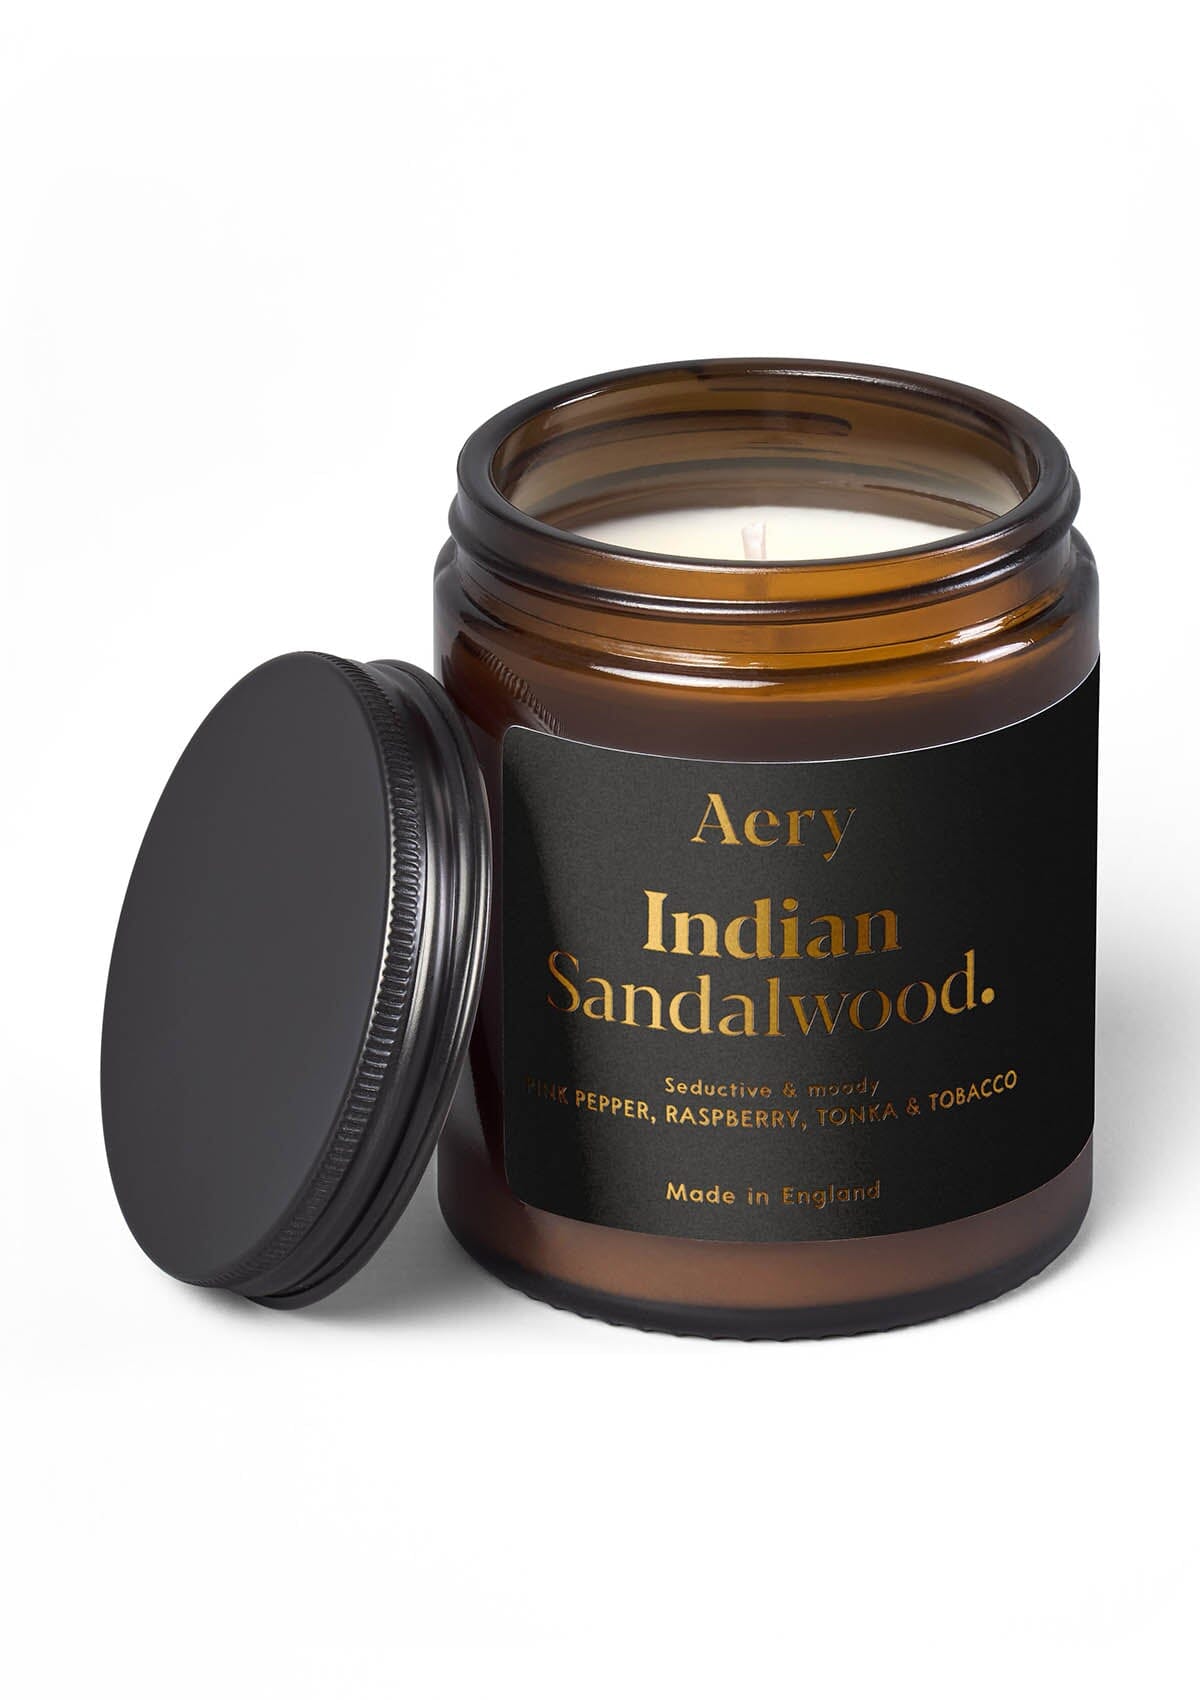 Black Indian Sandalwood jar candle by Aery displayed on white background 